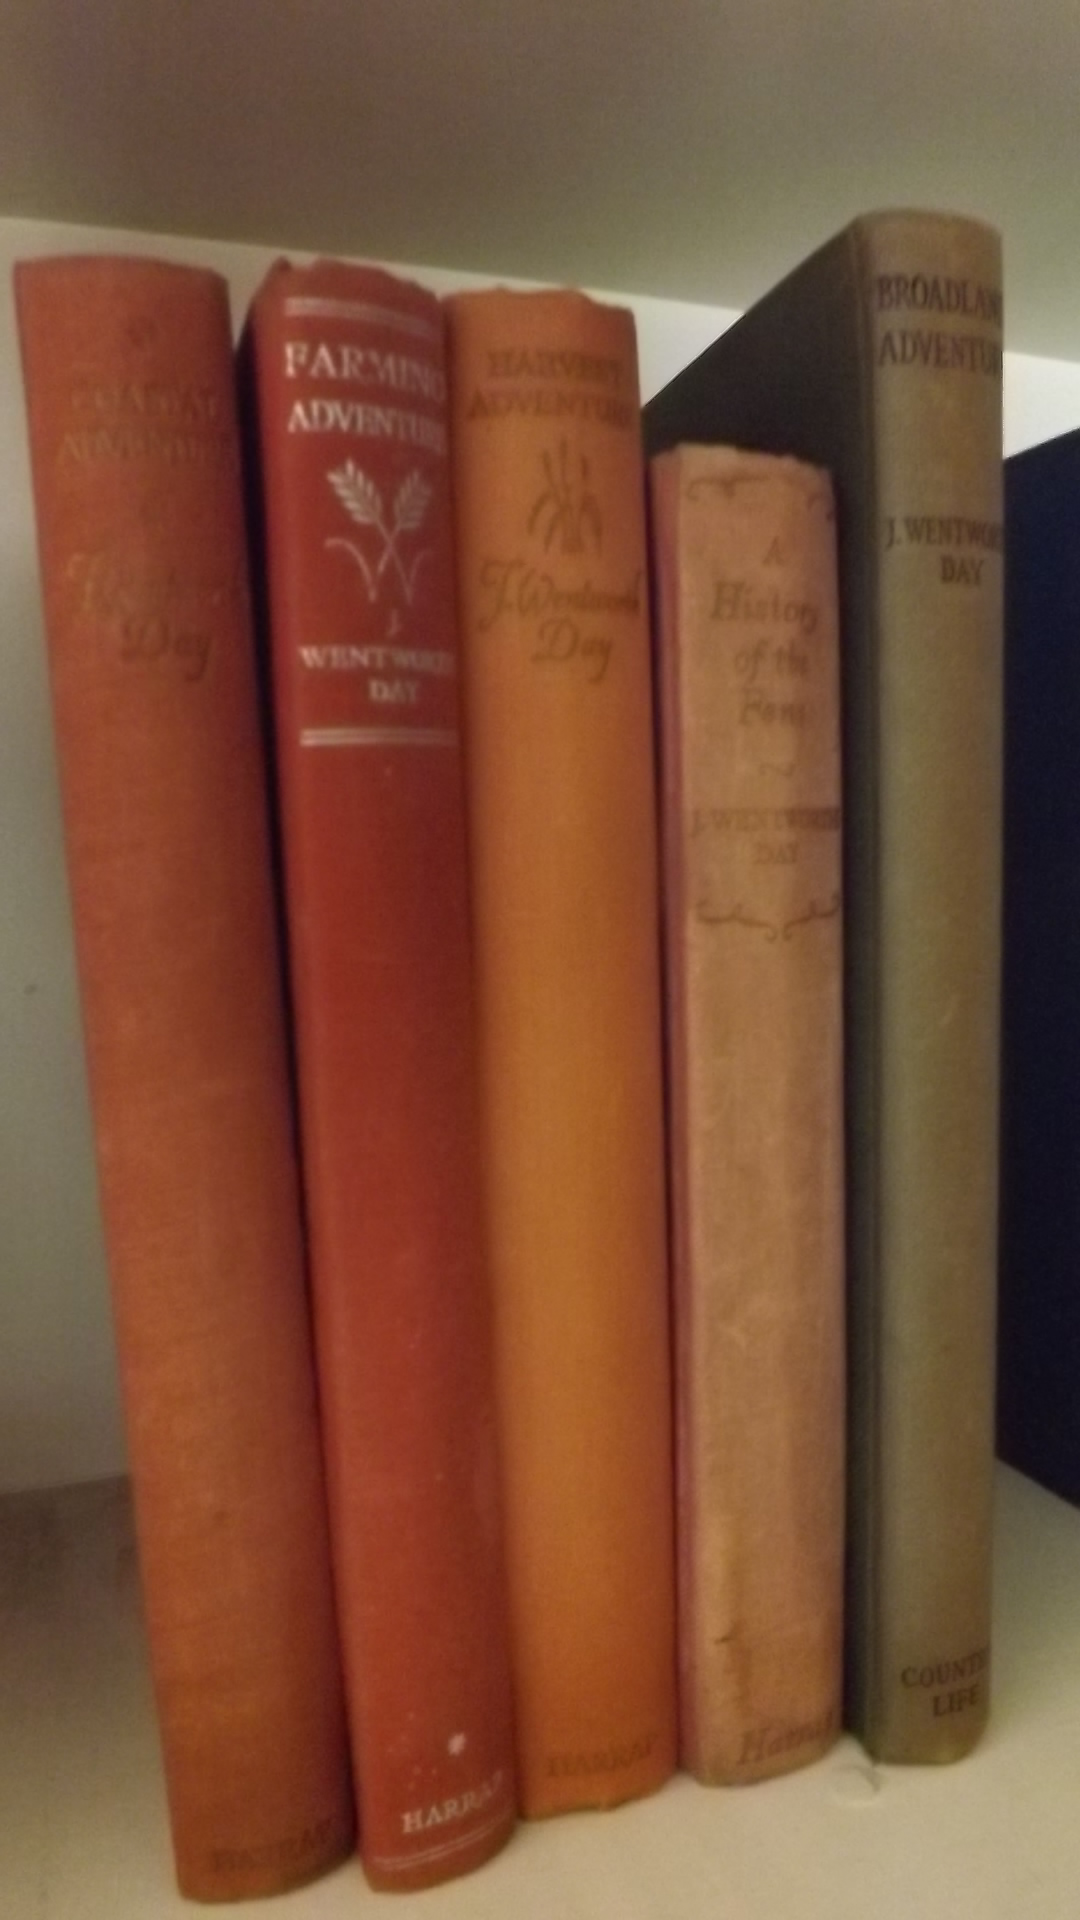 Five volumes of Fenland Farming Interest